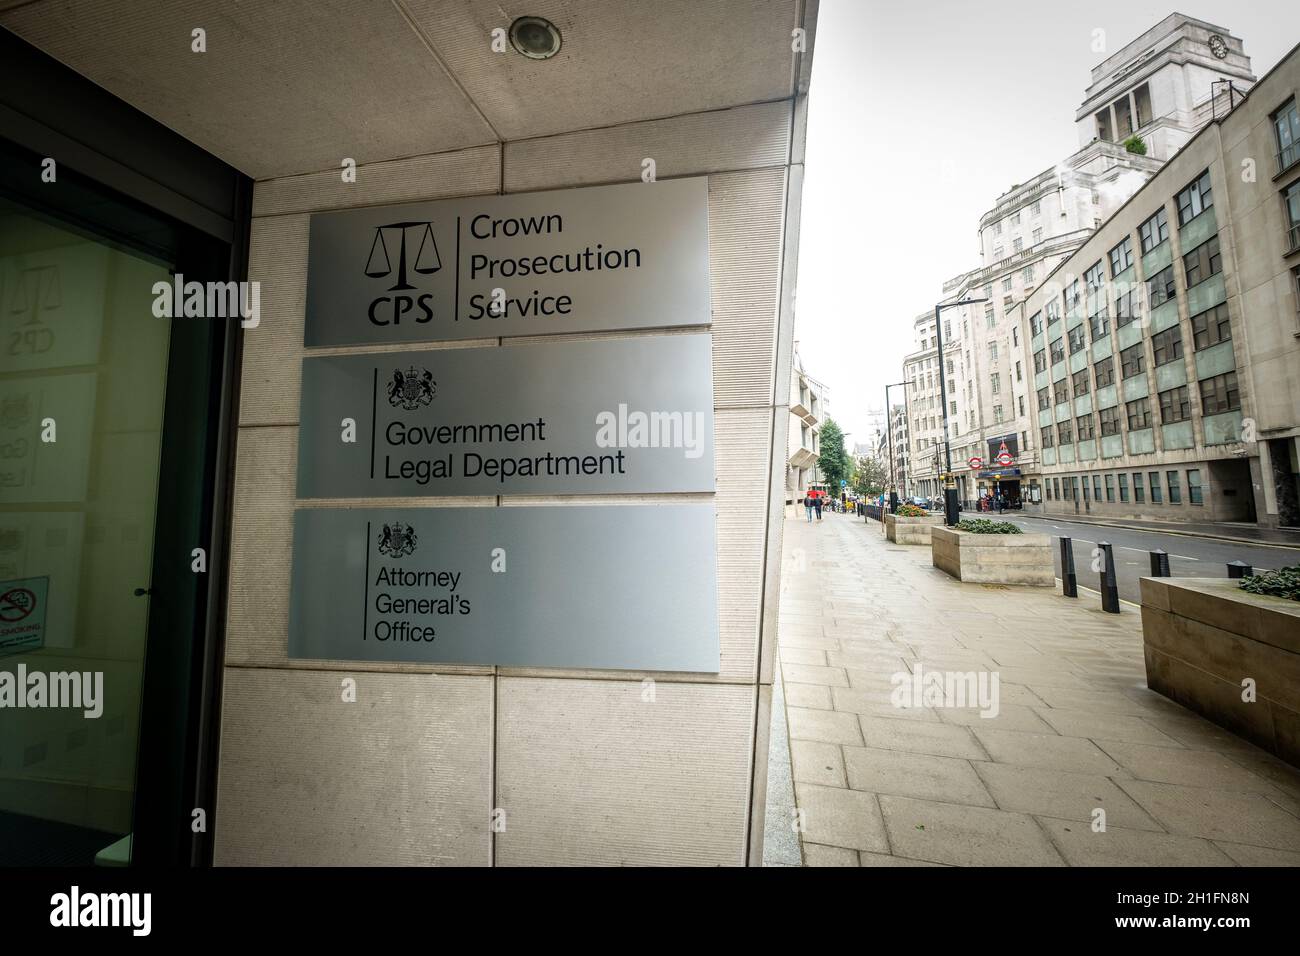 Westminster London - Crown Prosecution Service, Government Legal Department & Attorney General's Office Signage. Regierungsgebäude in Großbritannien Stockfoto